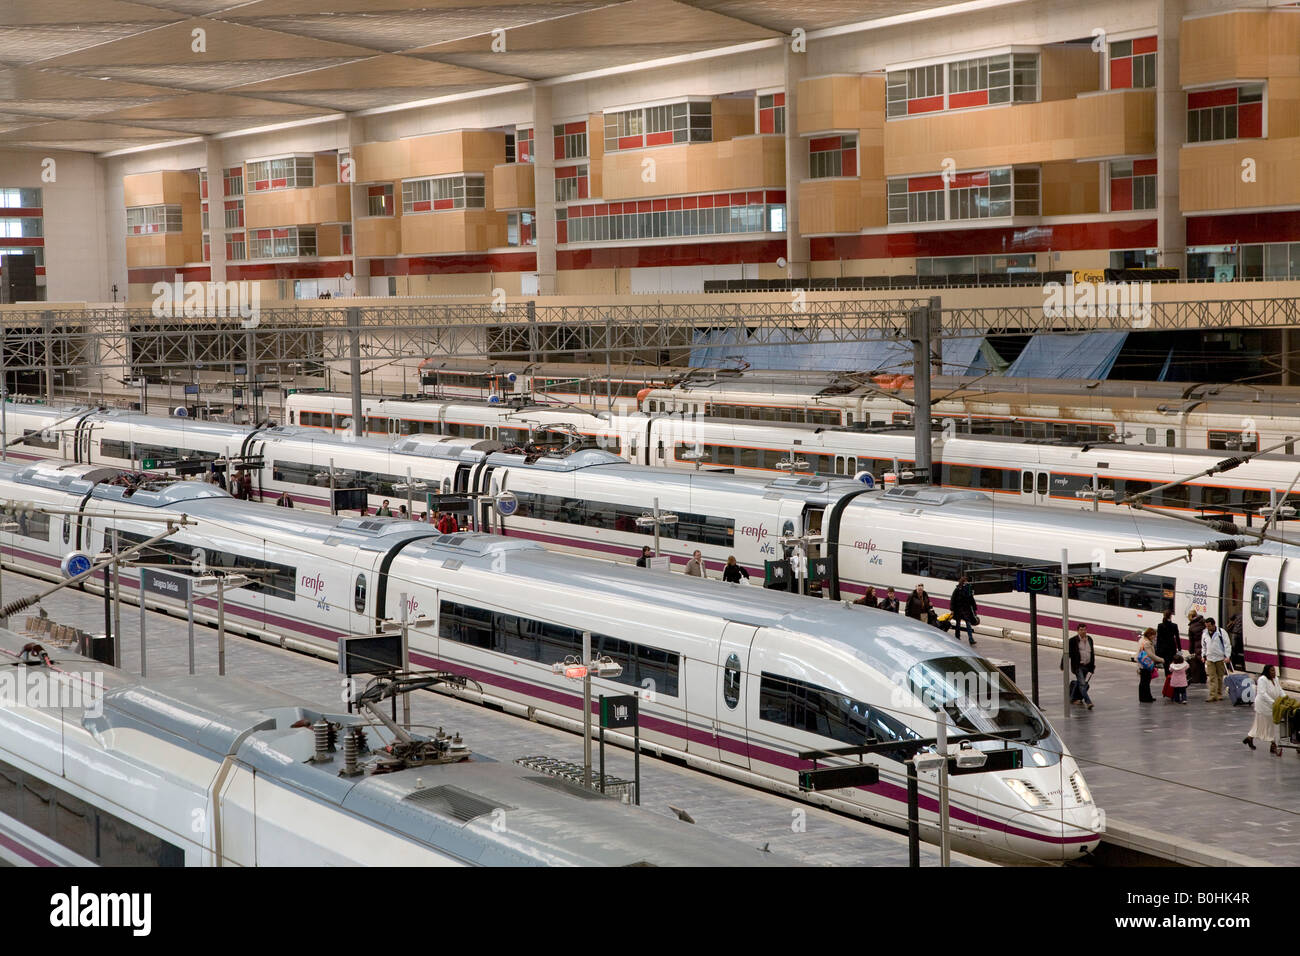 AVE high-speed bullet trains waiting at the platforms of the Estacion de Delicias train station in Saragossa or Zaragoza, Casti Stock Photo